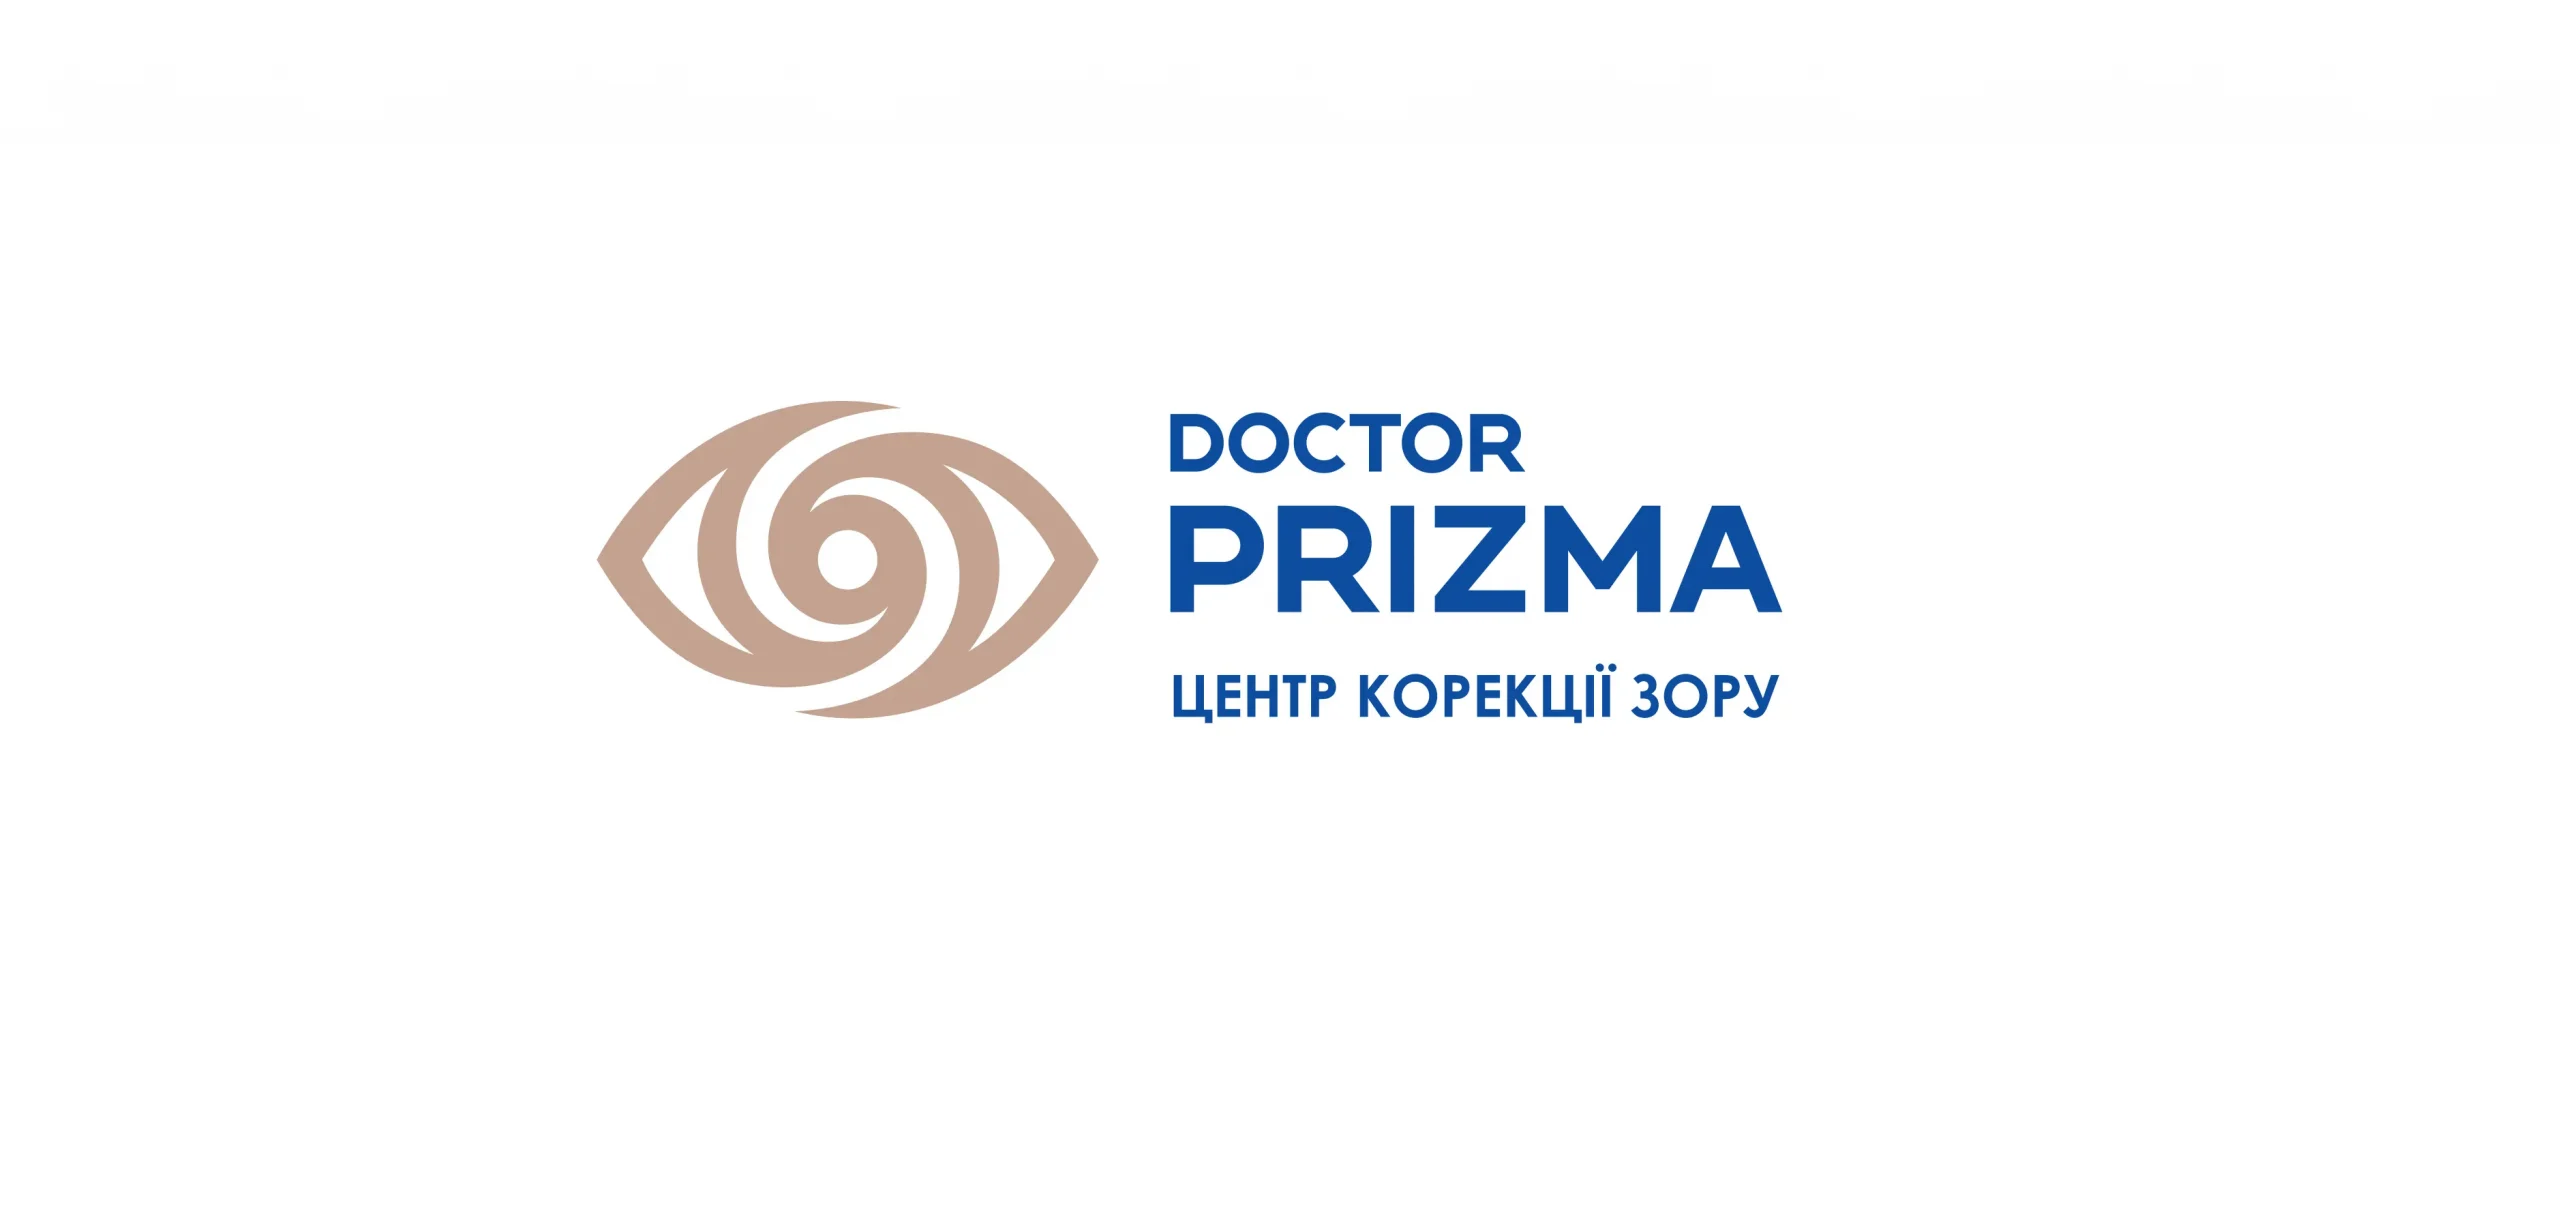 ophthalmological-center-logo-design